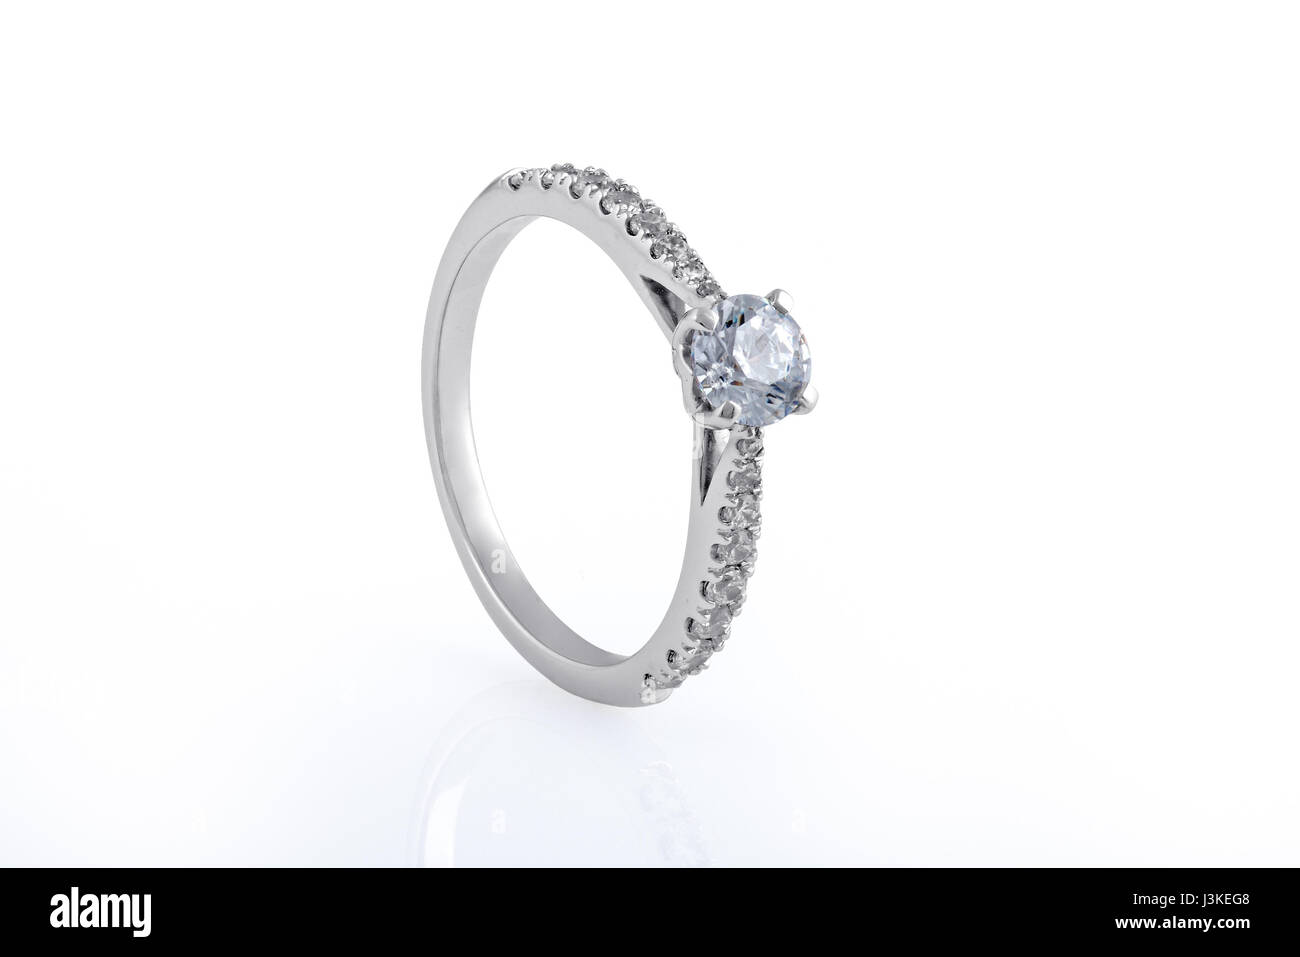 White Gold Wedding, Engagement Rings with Diamonds on white background Stock Photo